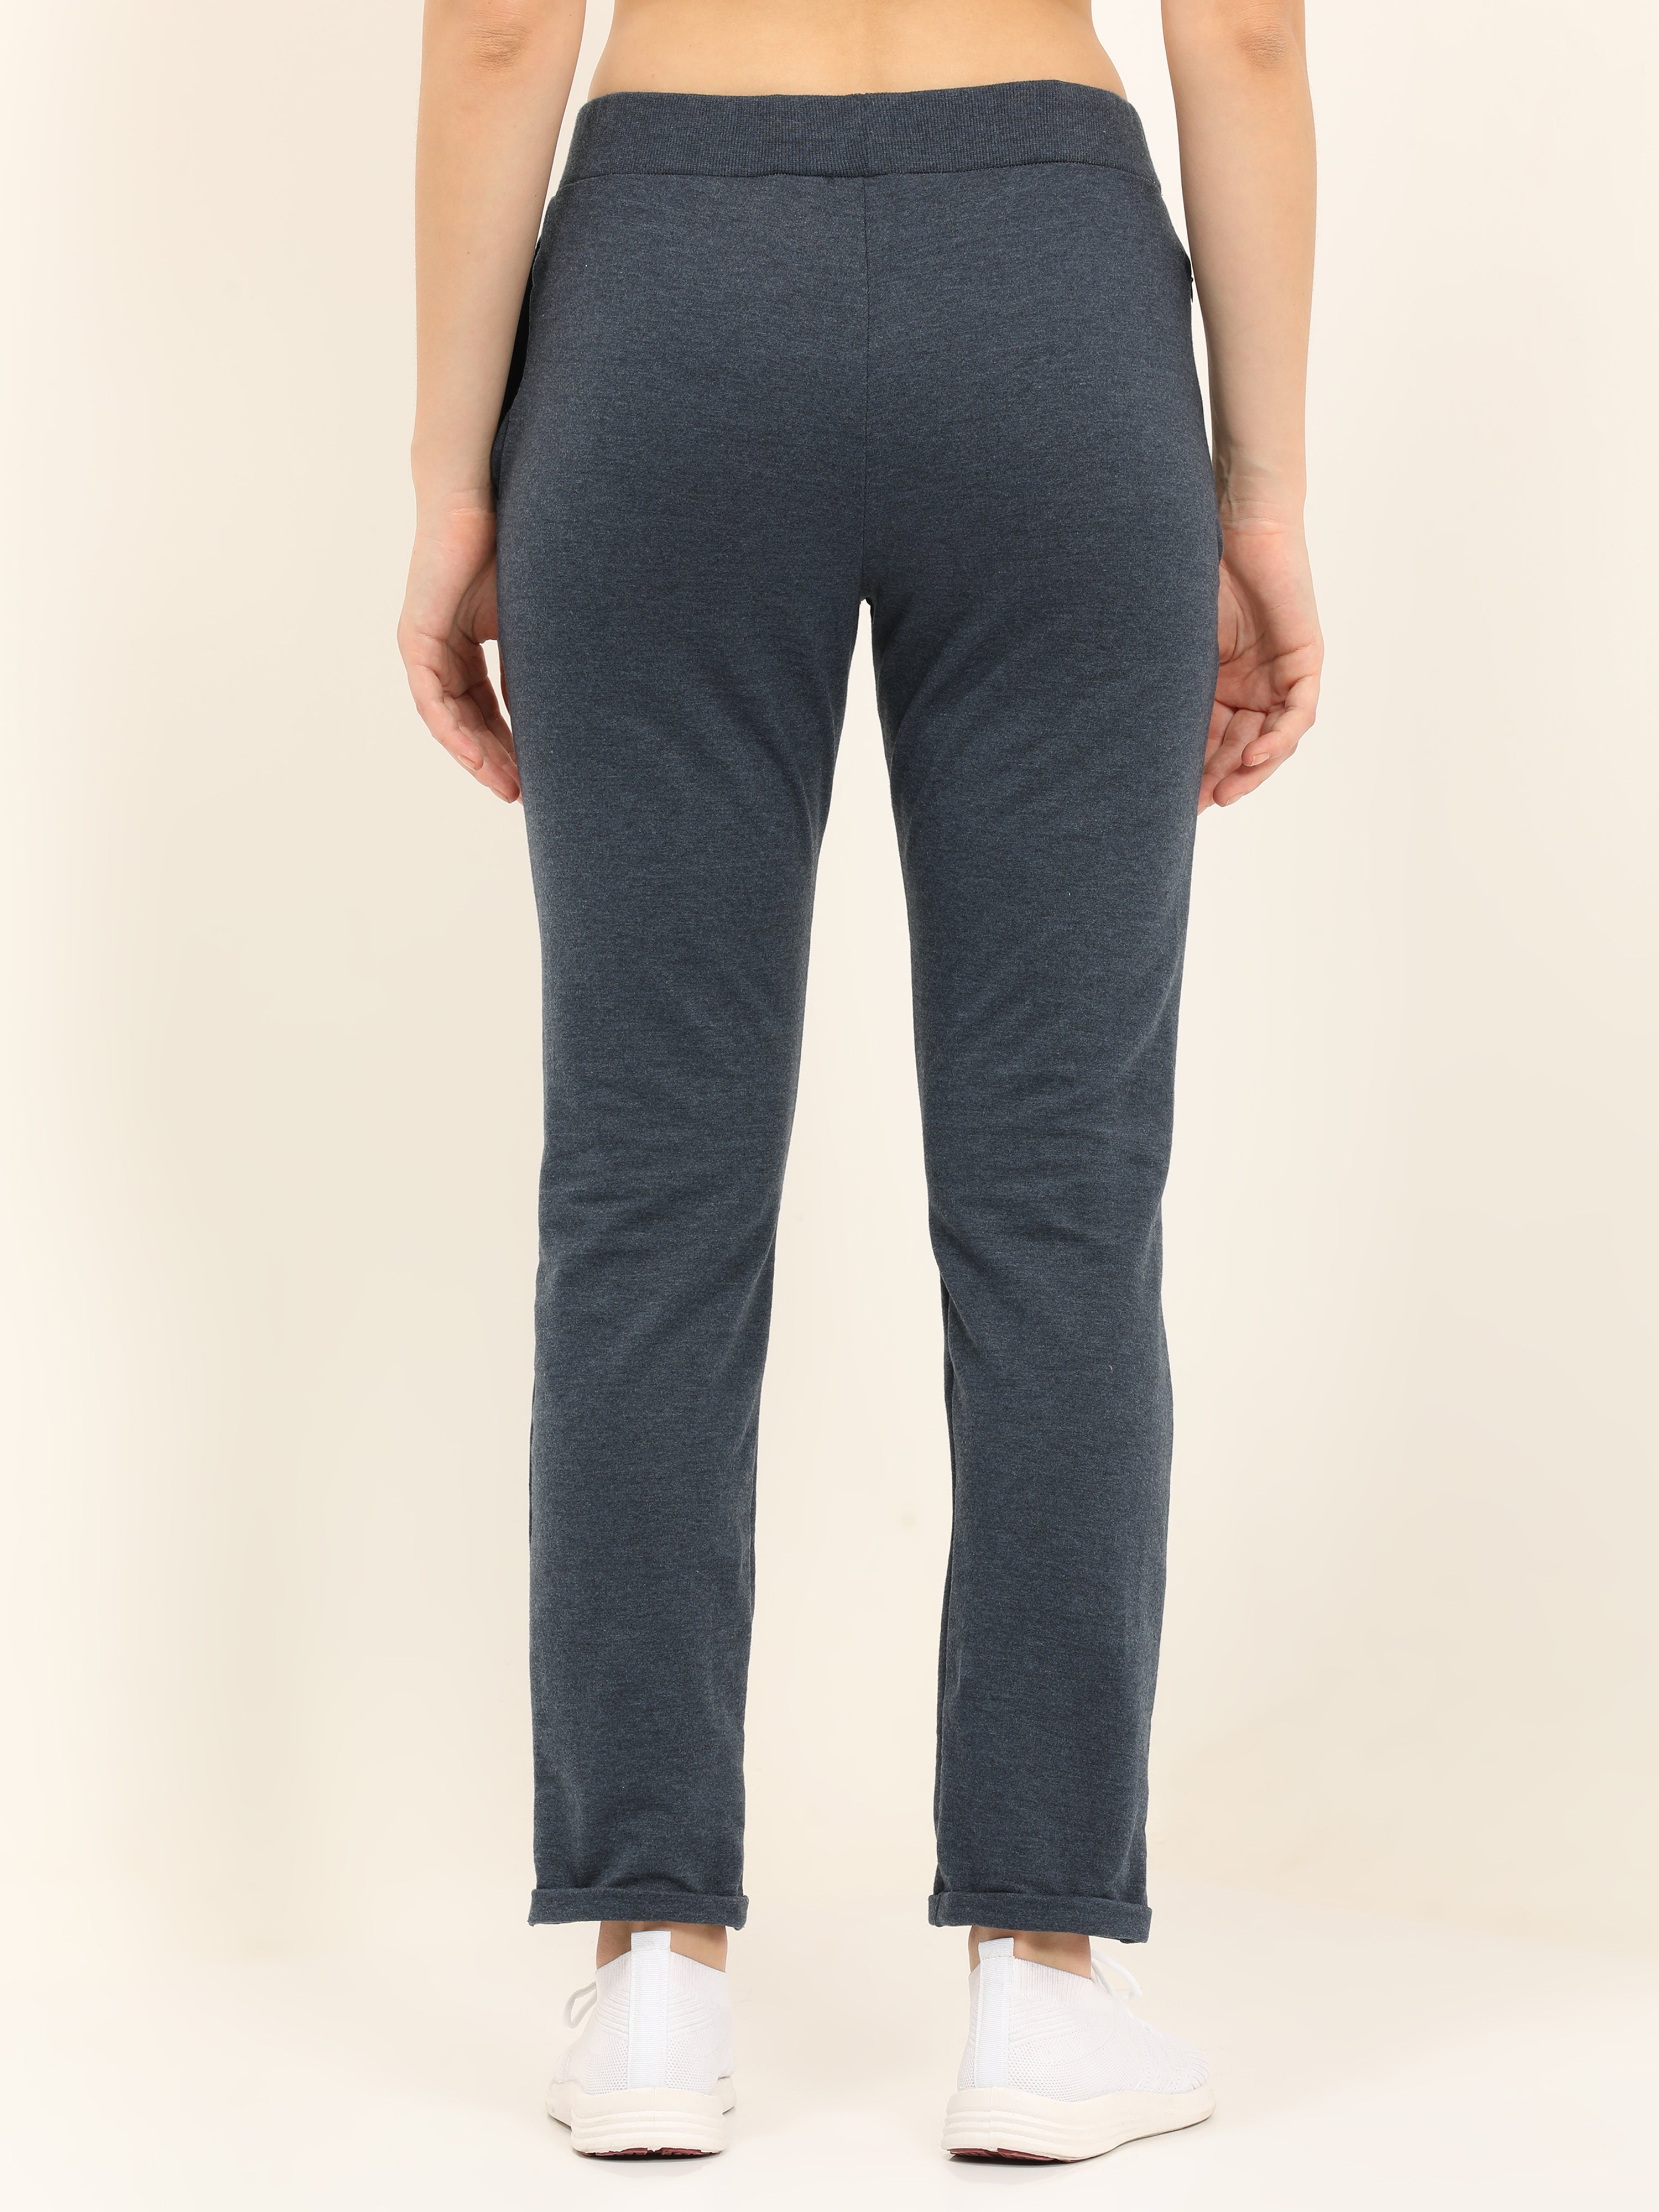 Linen Pajama pants / Linen loose pants / Woman's Linen pants / Wood rose  linen pants / Soft linen trousers -/Woman Linen pajama Pants